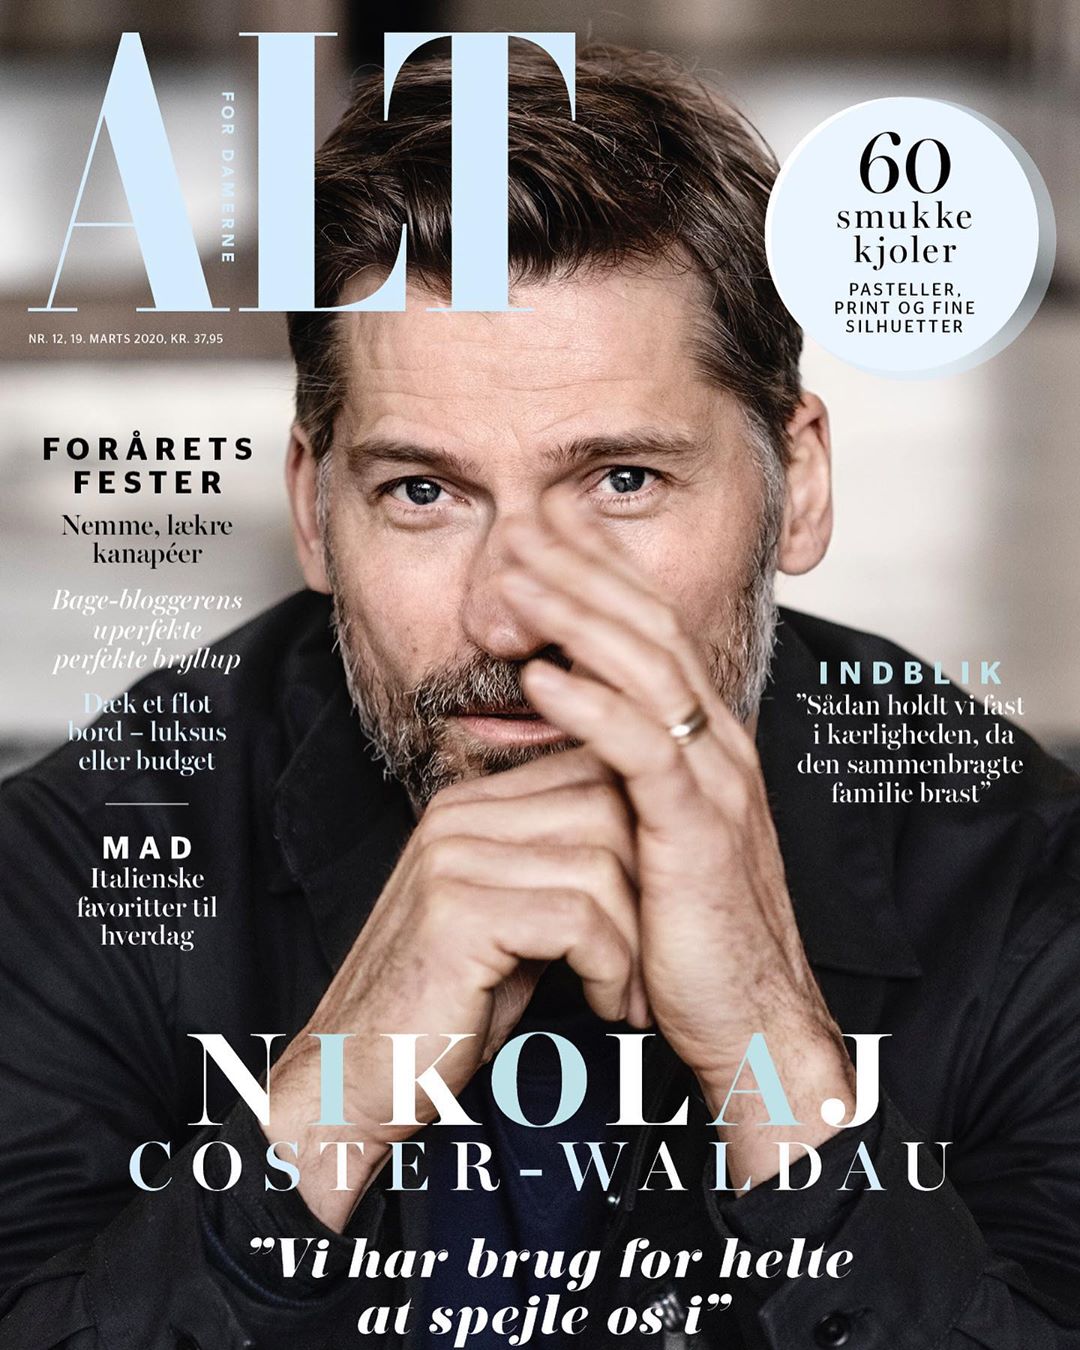 Silvianap 𝘴𝘱𝘢𝘮𝘴 Nik 🦁 and Gwen 👑 on Twitter: "Nikolaj Coster-Waldau  for "ALT for damerne" magazine 📰 March 2020 🌼 (Part 2)  #NikolajCosterWaldau ☀️ https://t.co/ZSFh9DCDD9" / Twitter